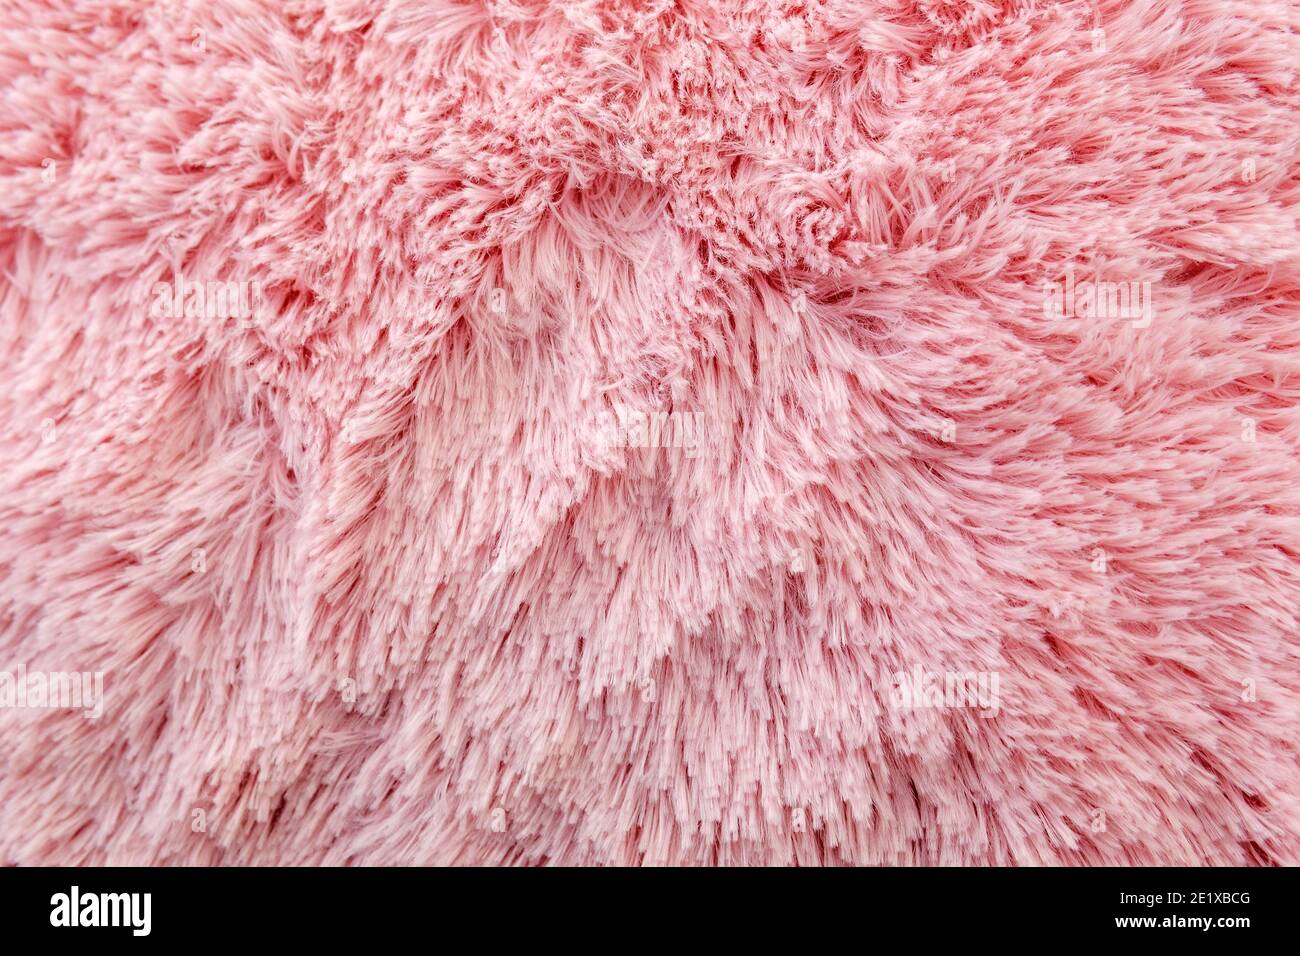 Pink sheepskin pink fur texture stock photo containing fur and textile